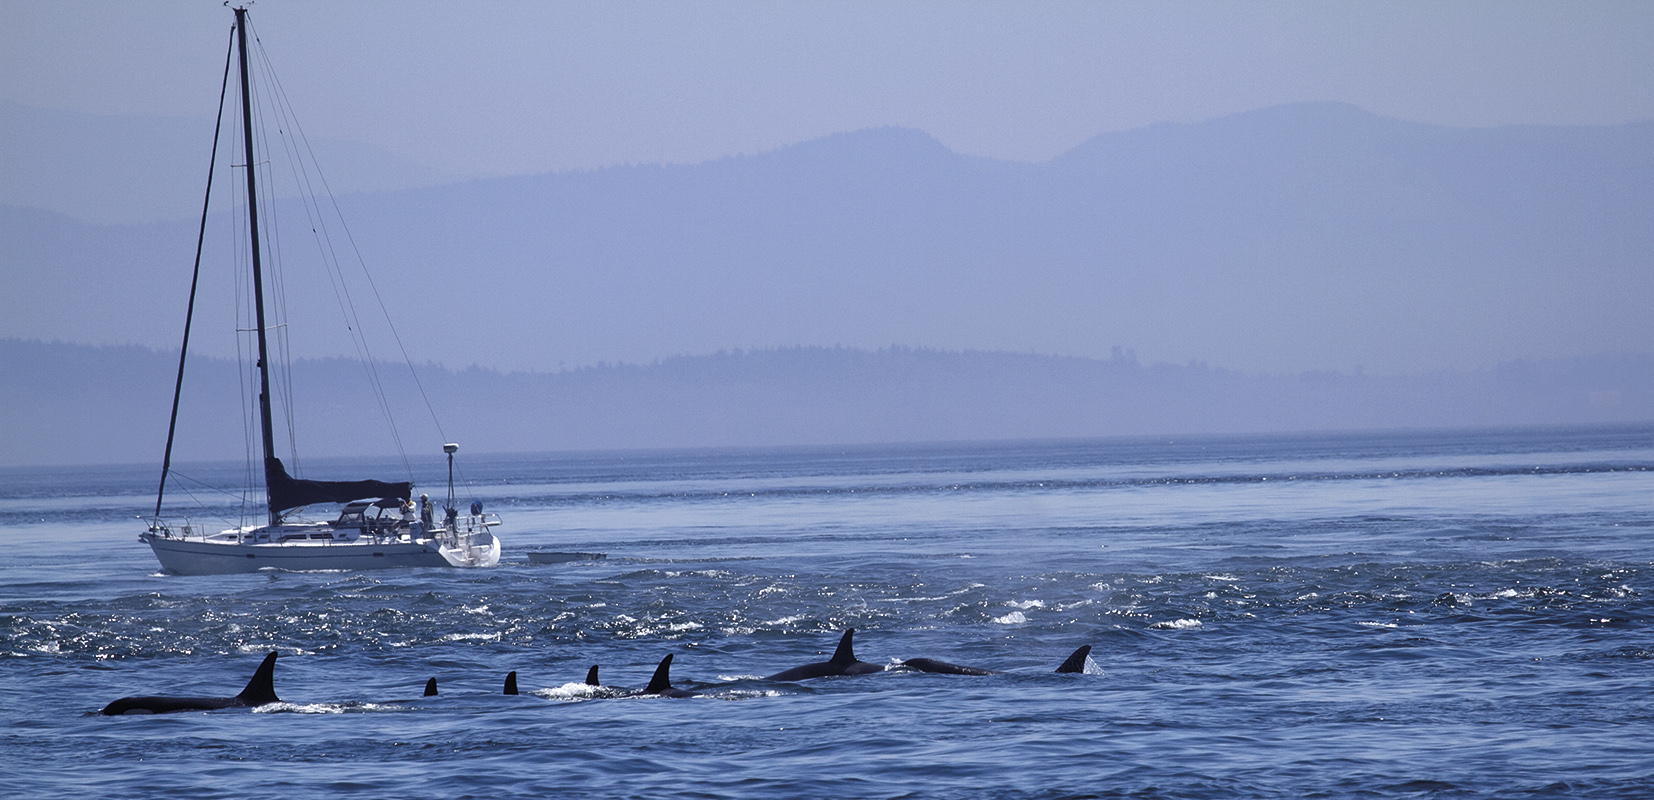 Grupo de orcas cerca de un barco en el mar